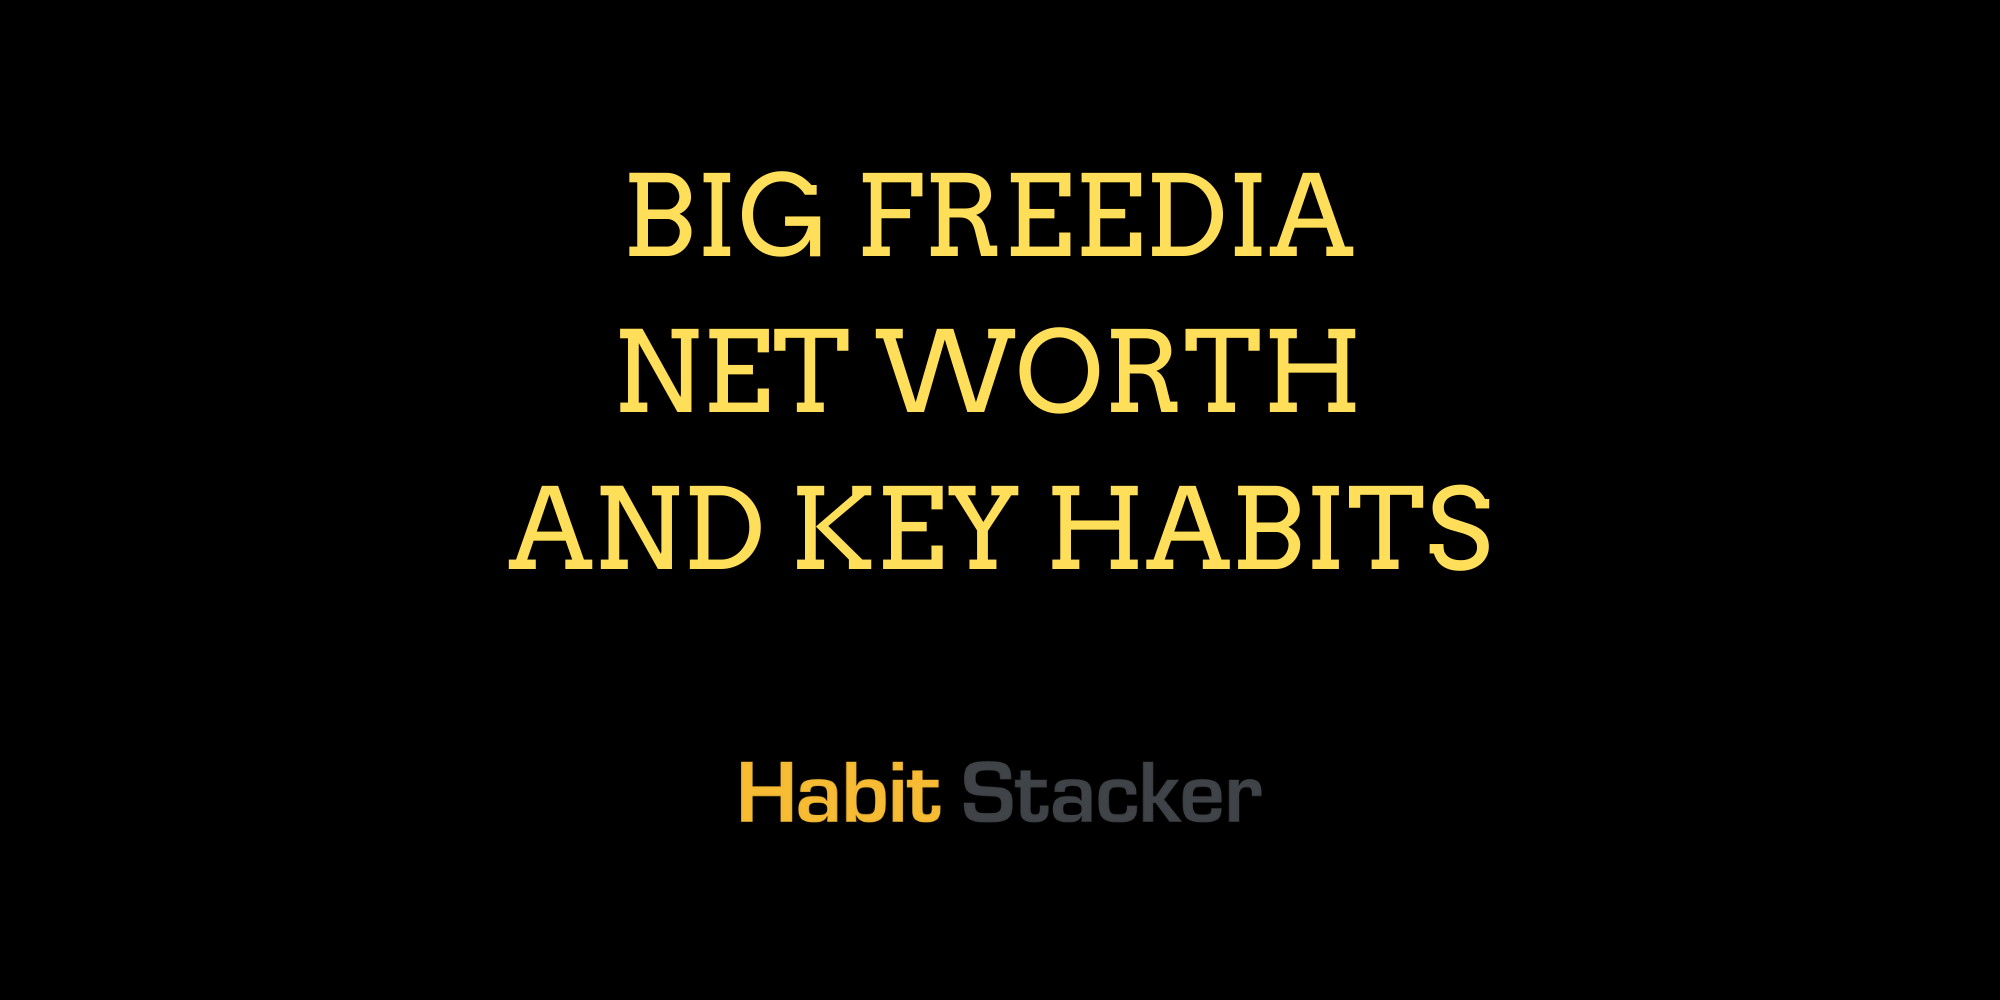 Big Freedia Net Worth and Key Habits